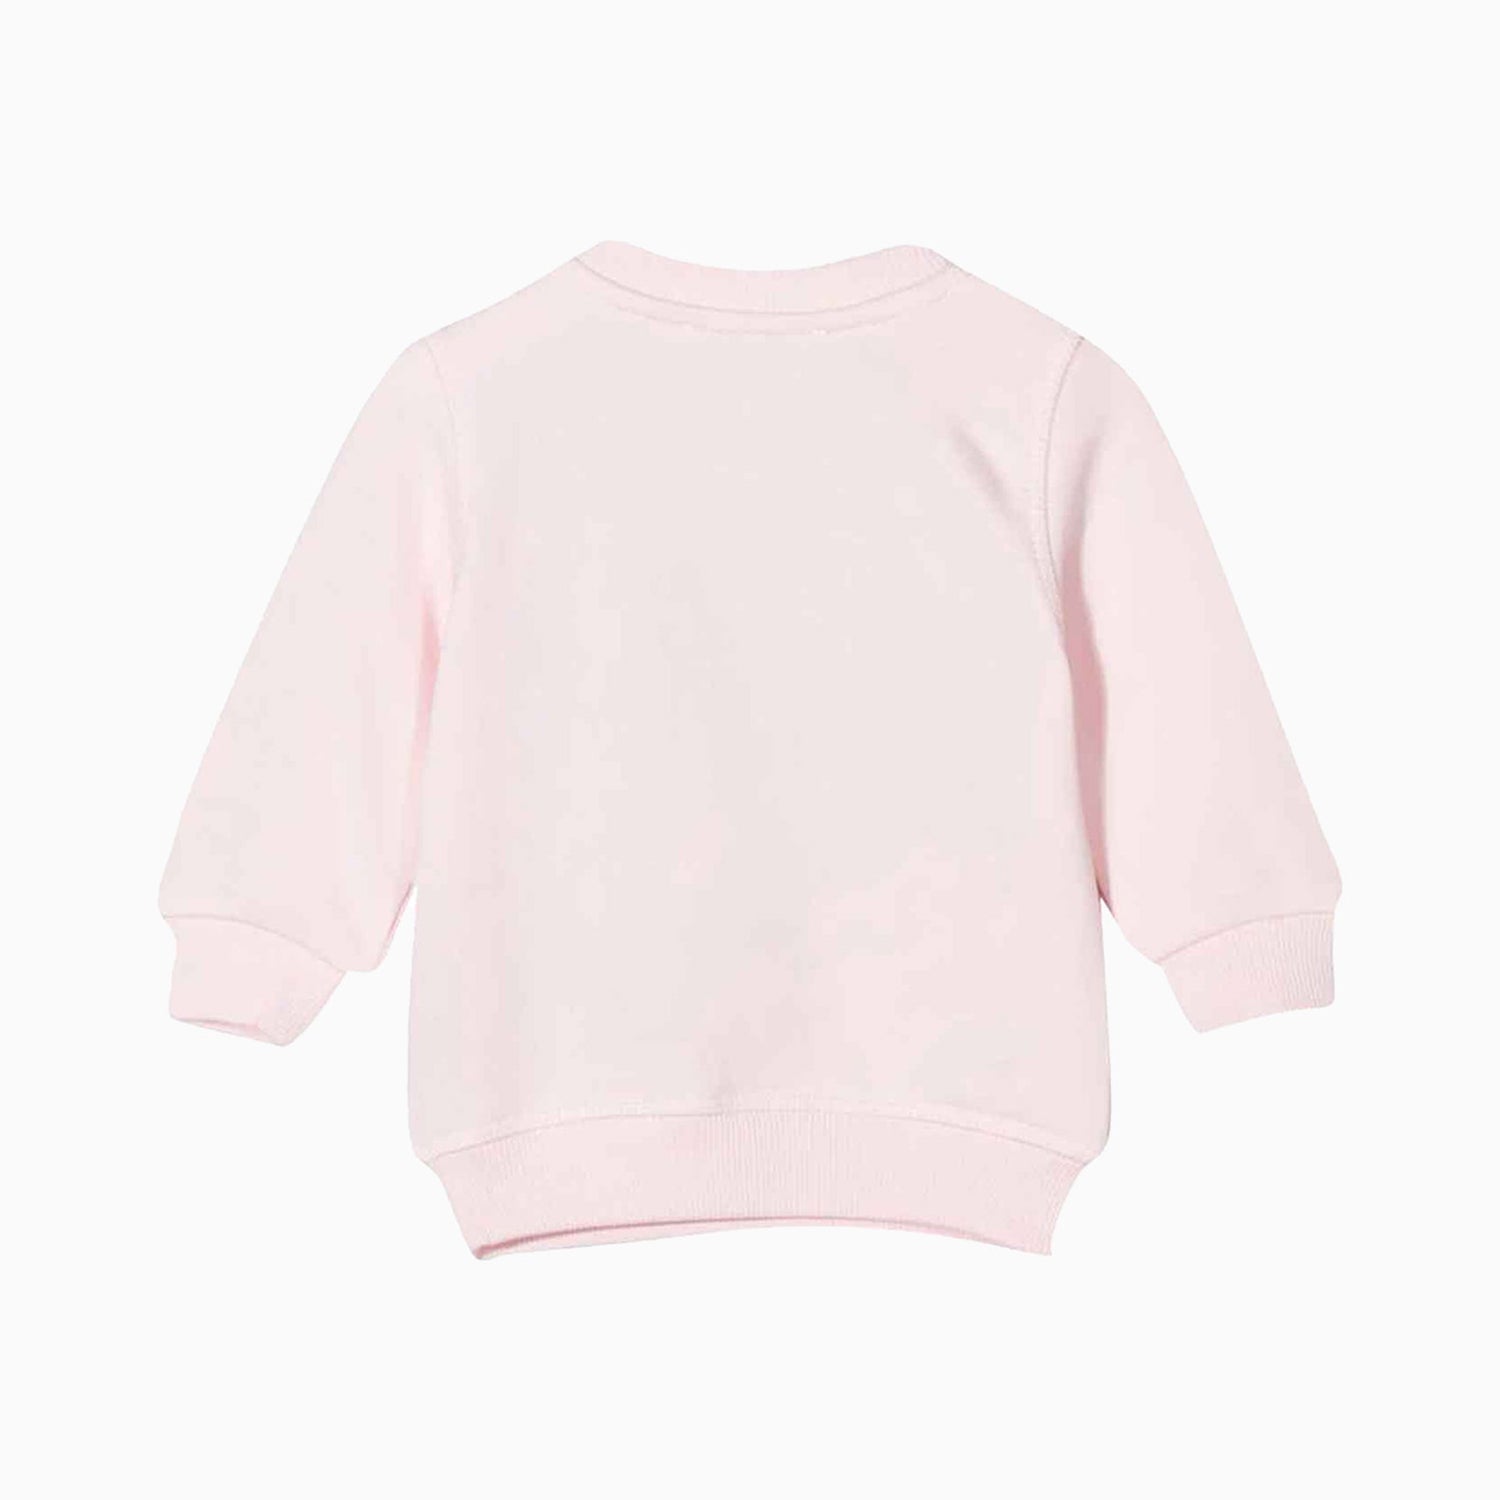 Kenzo Kid's Tiger Sweatshirt - Color: Pink Pale - Kids Premium Clothing -